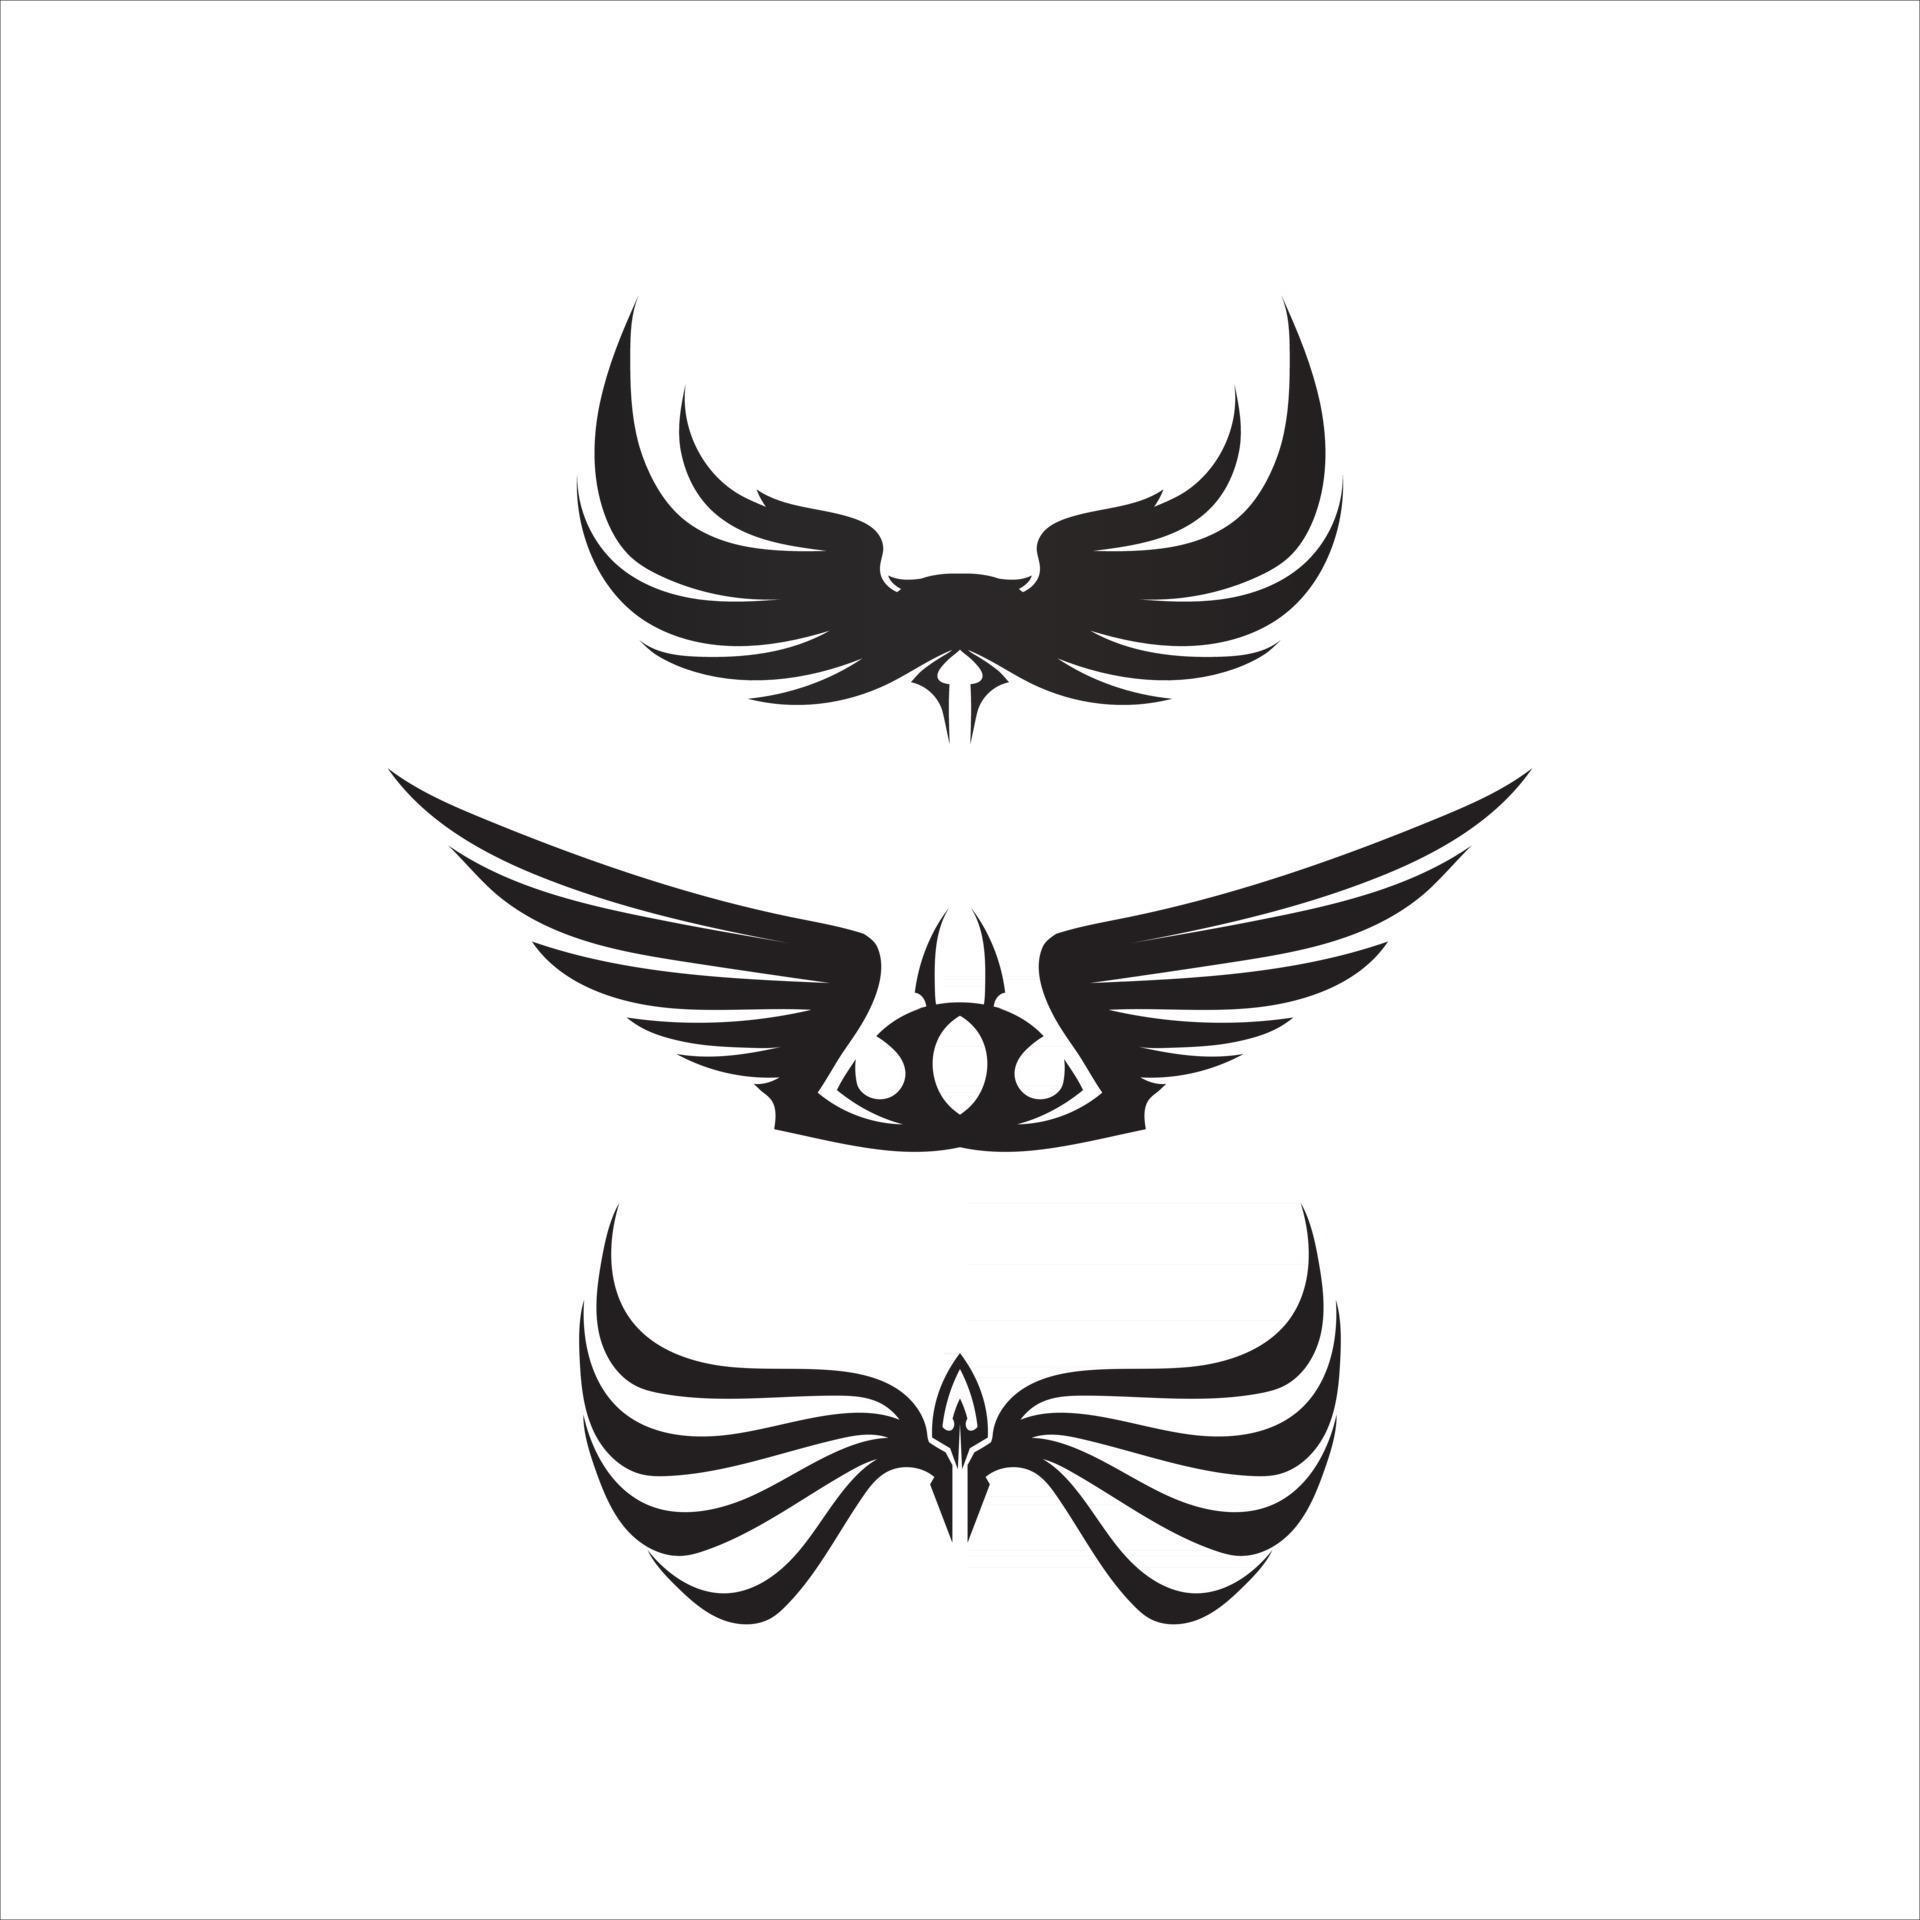 Black wing falcon and eagle logo symbol for a professional designer ...